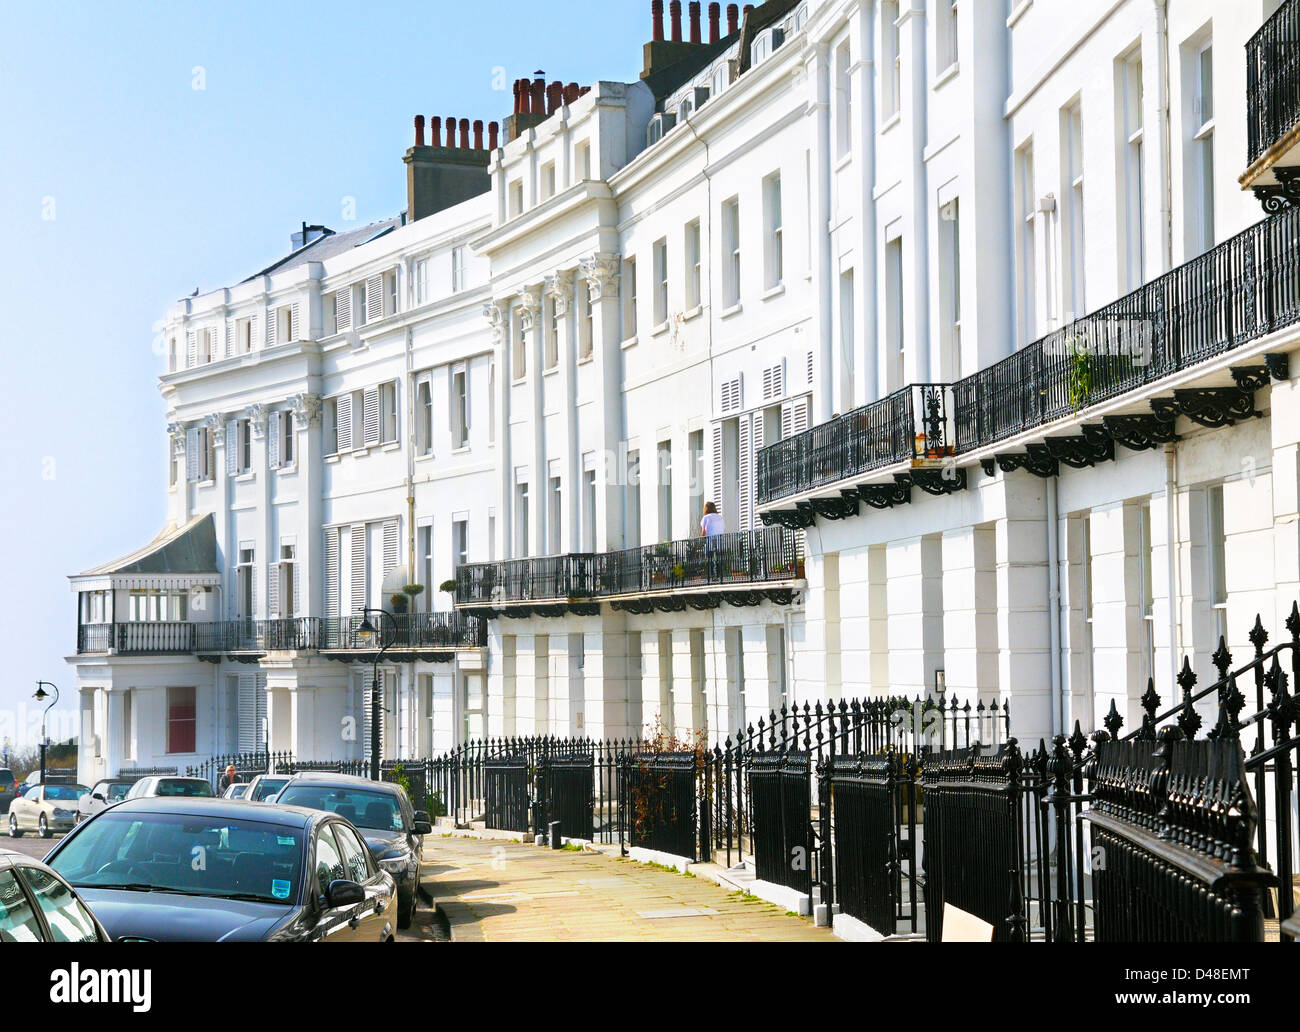 Lewes Crescent, Kemp Town, Brighton, East Sussex, UK Stockfoto